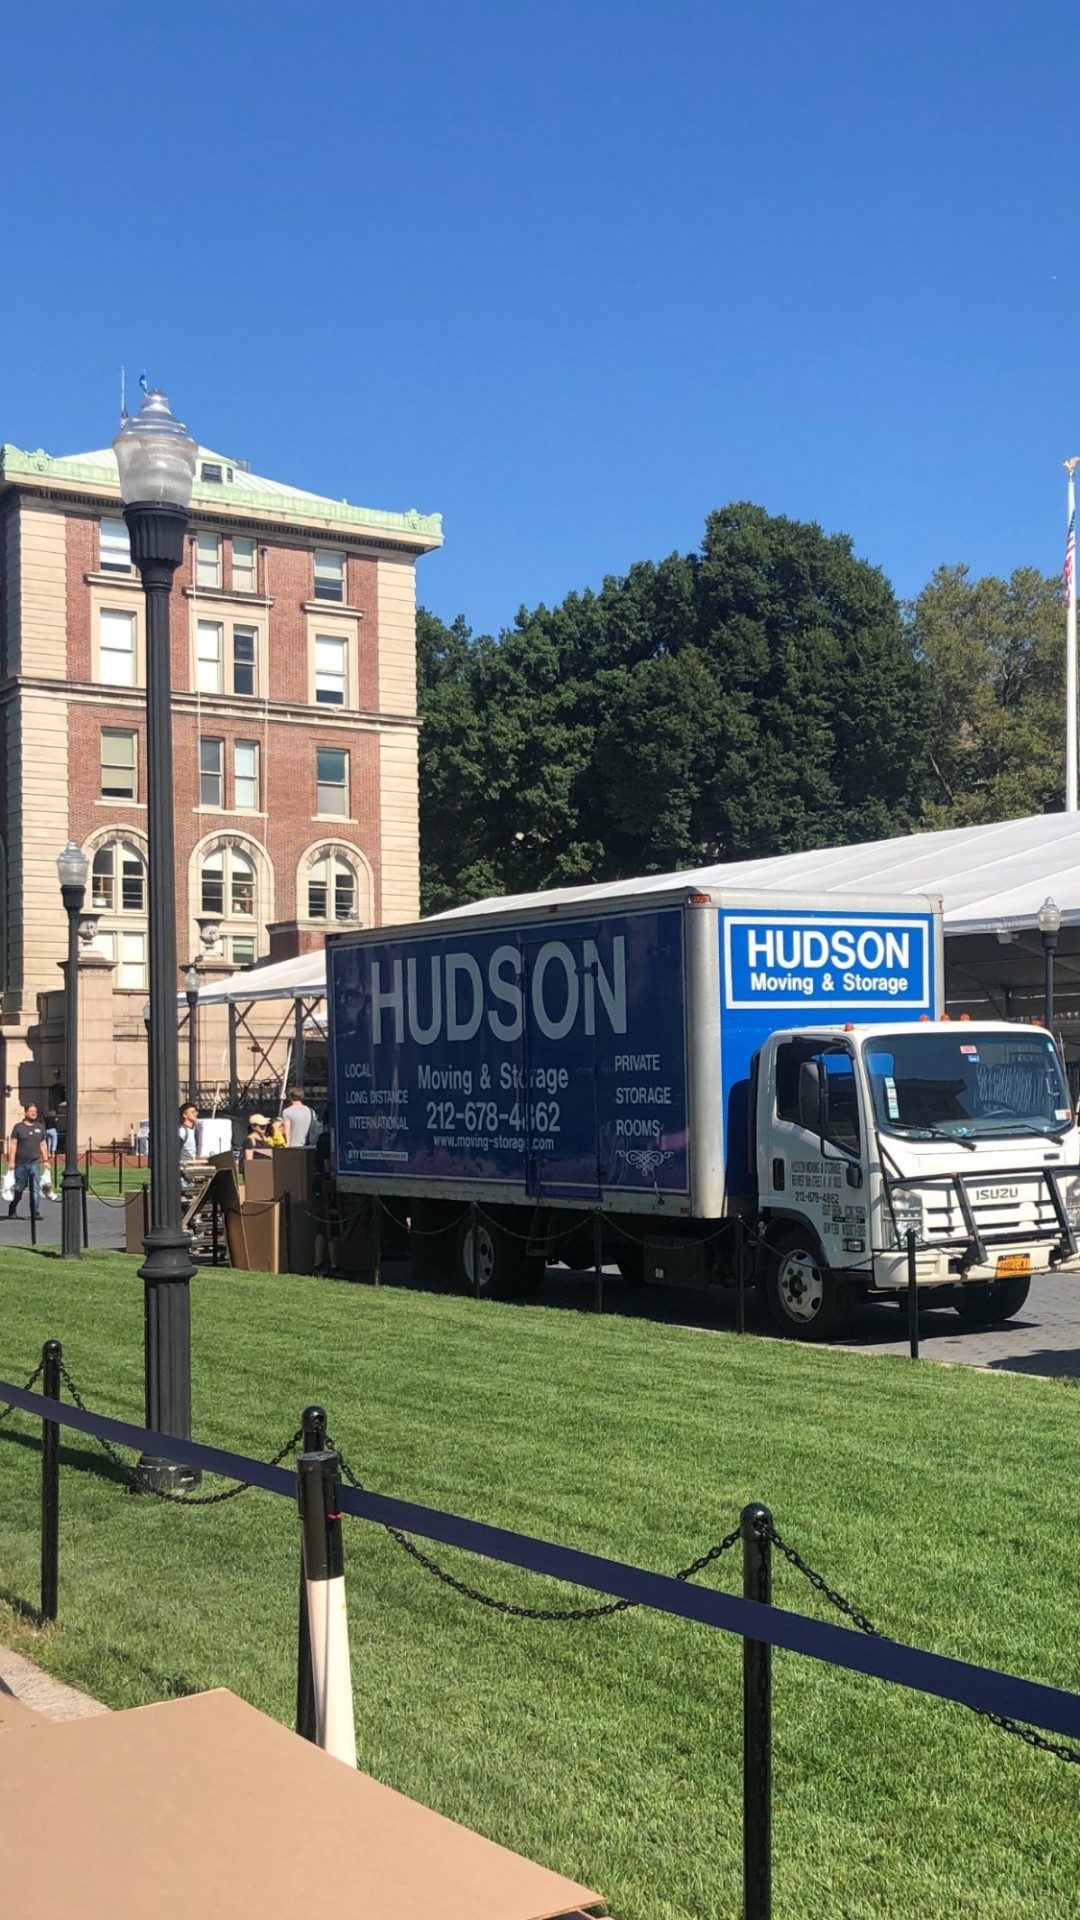 Hudson Moving & Storage